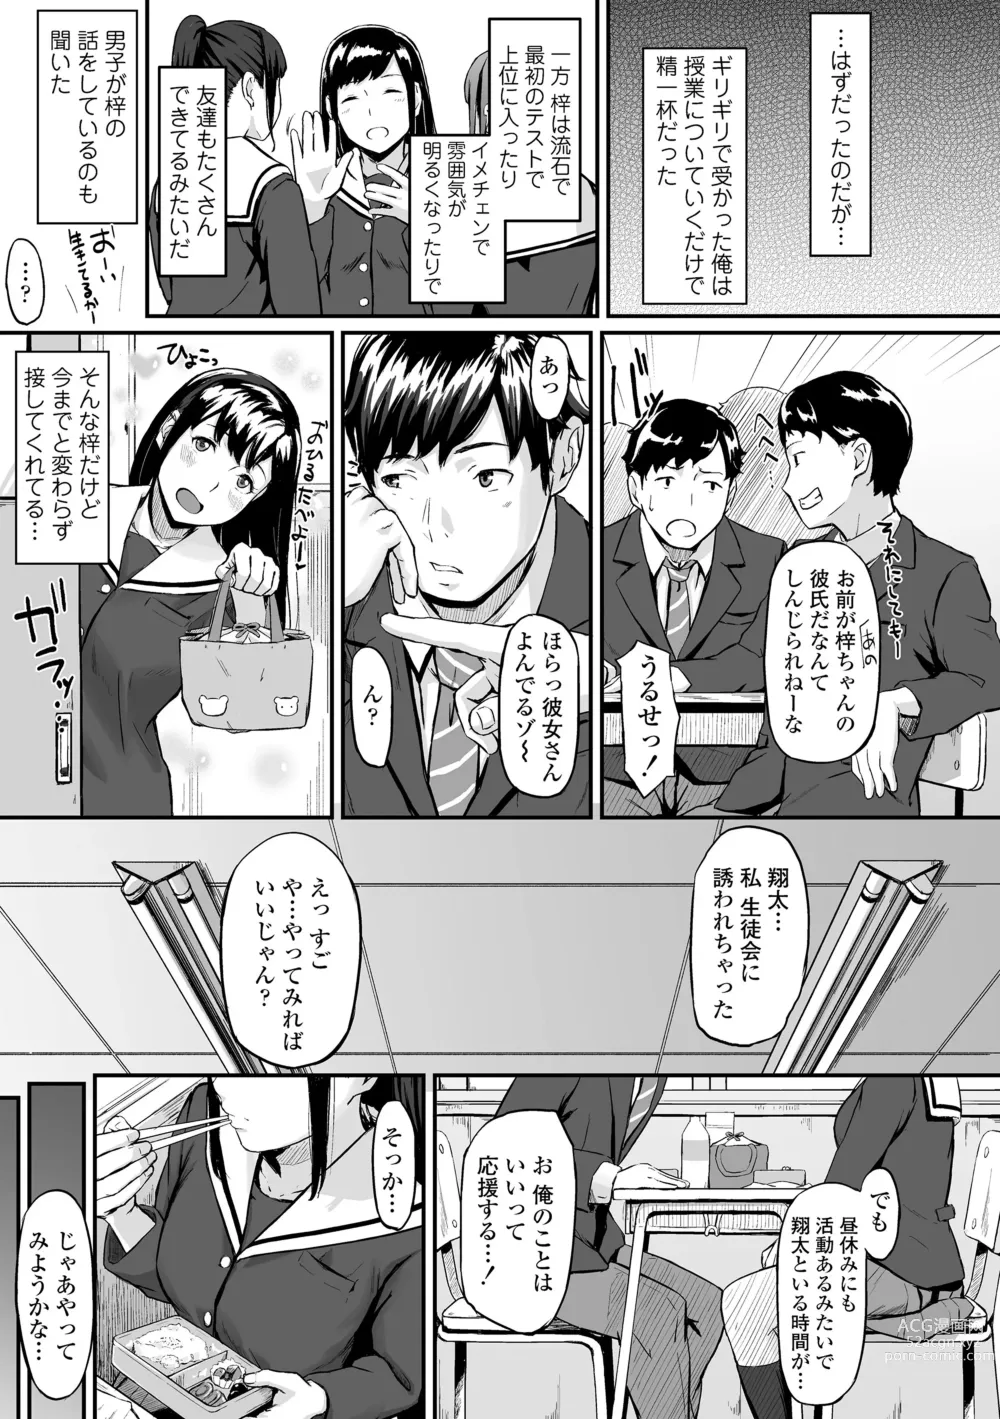 Page 9 of manga Okinagusa